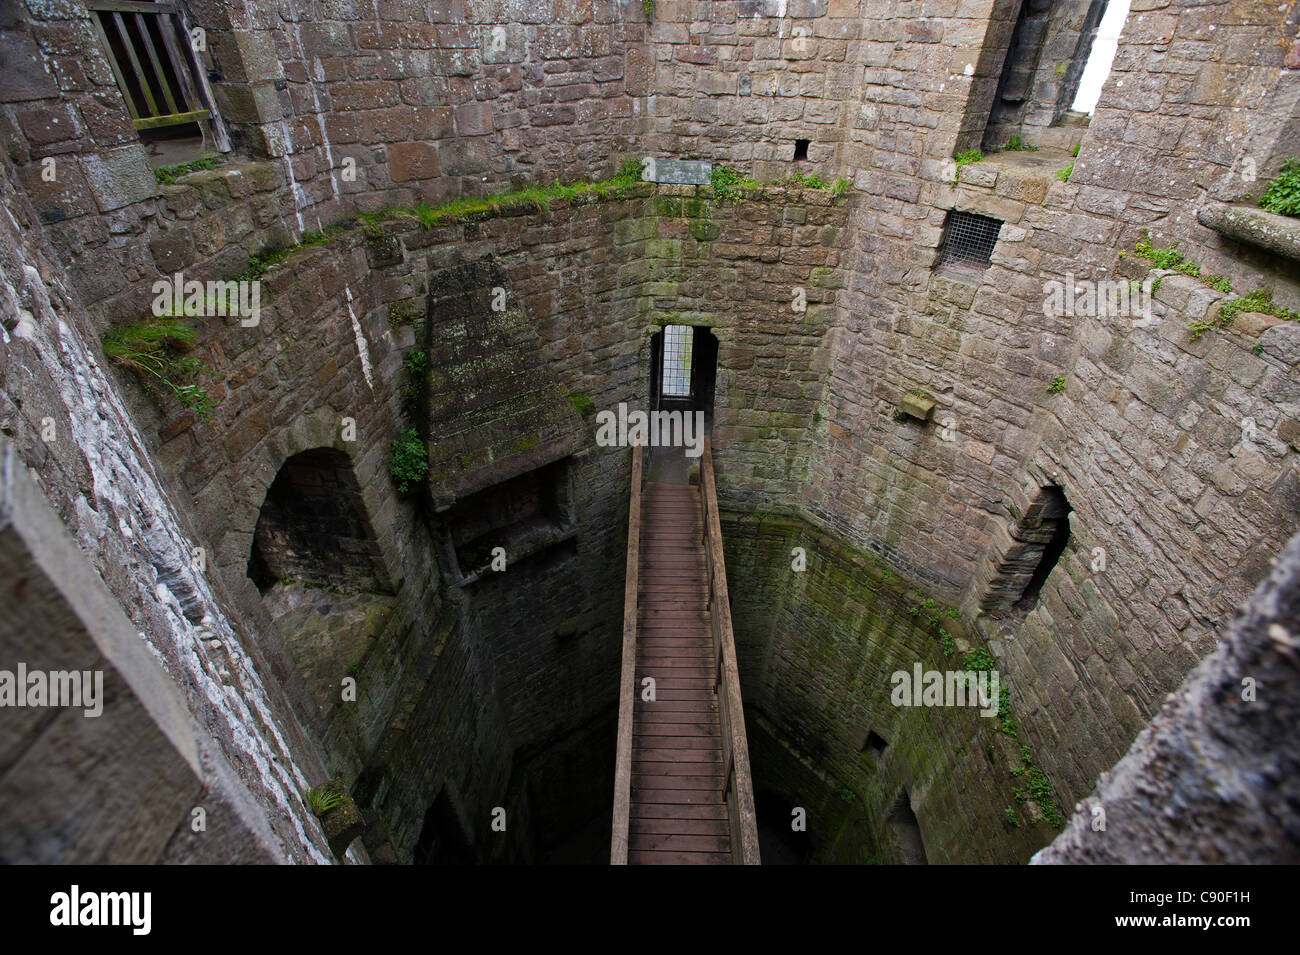 Inside view of the tower at Caernarfon Castle, Caernarfon, Wales, UK Stock Photo